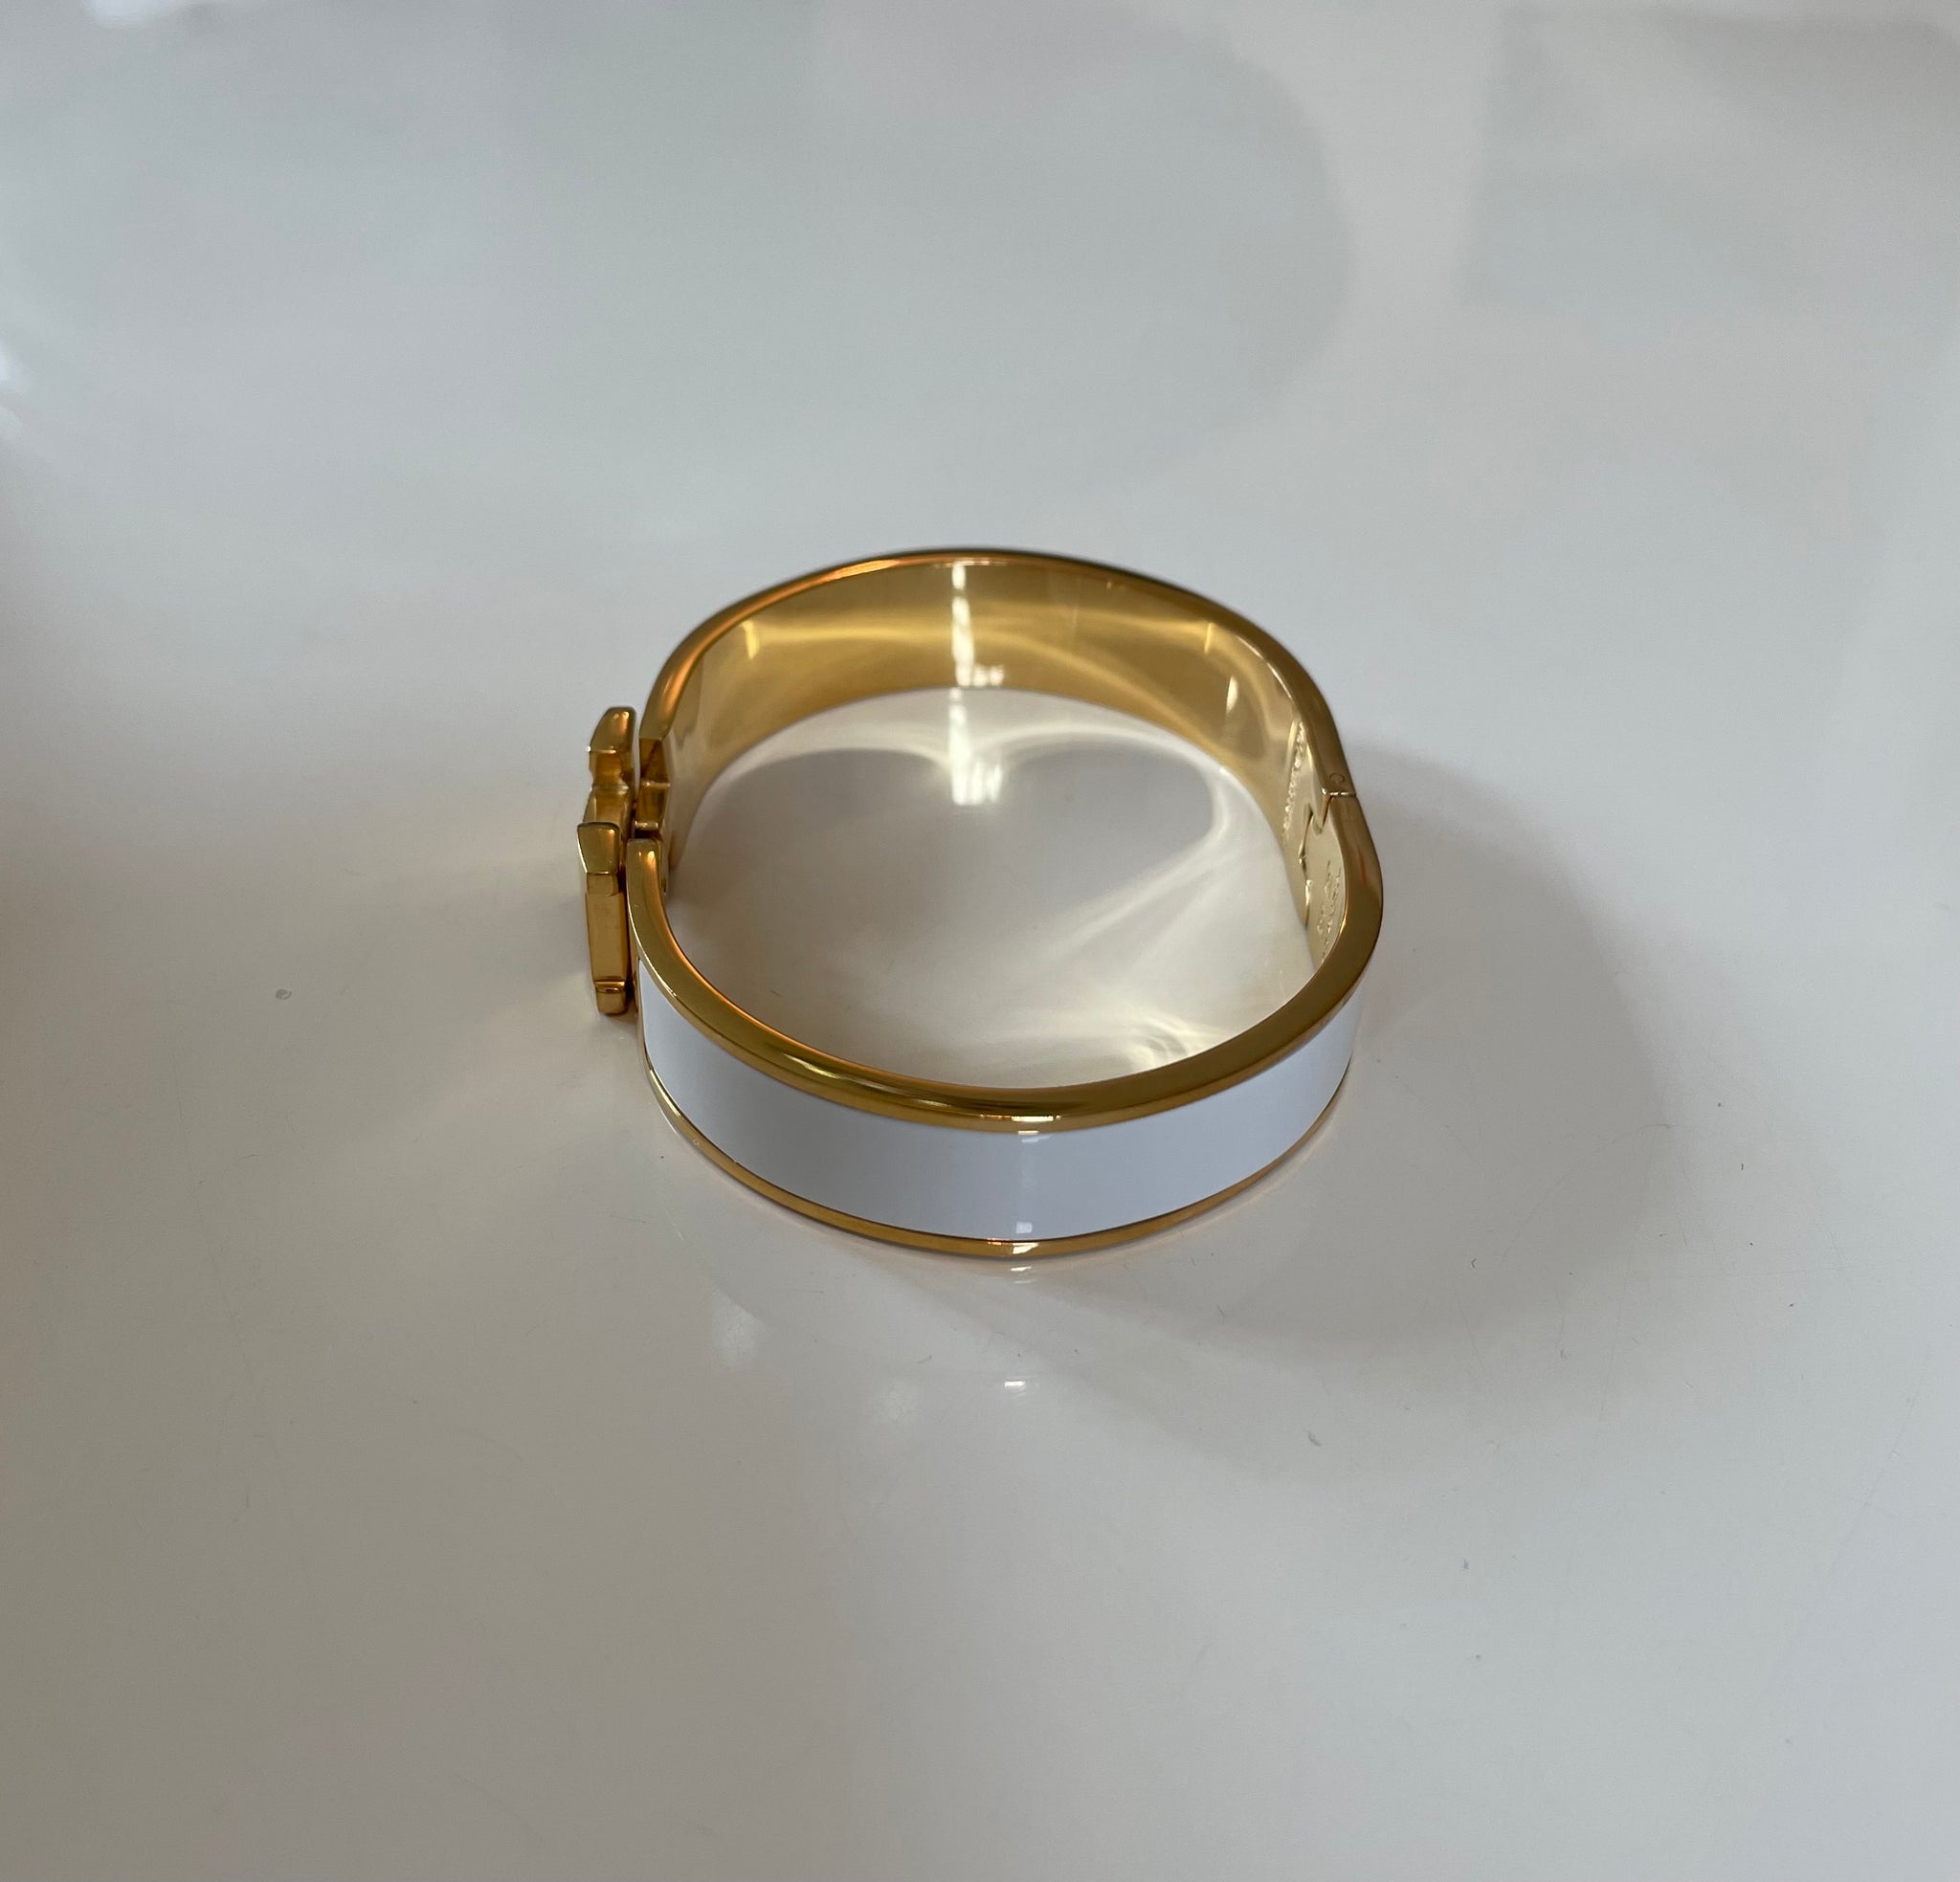 Gold H Cuff Bracelet in Black – mitylene